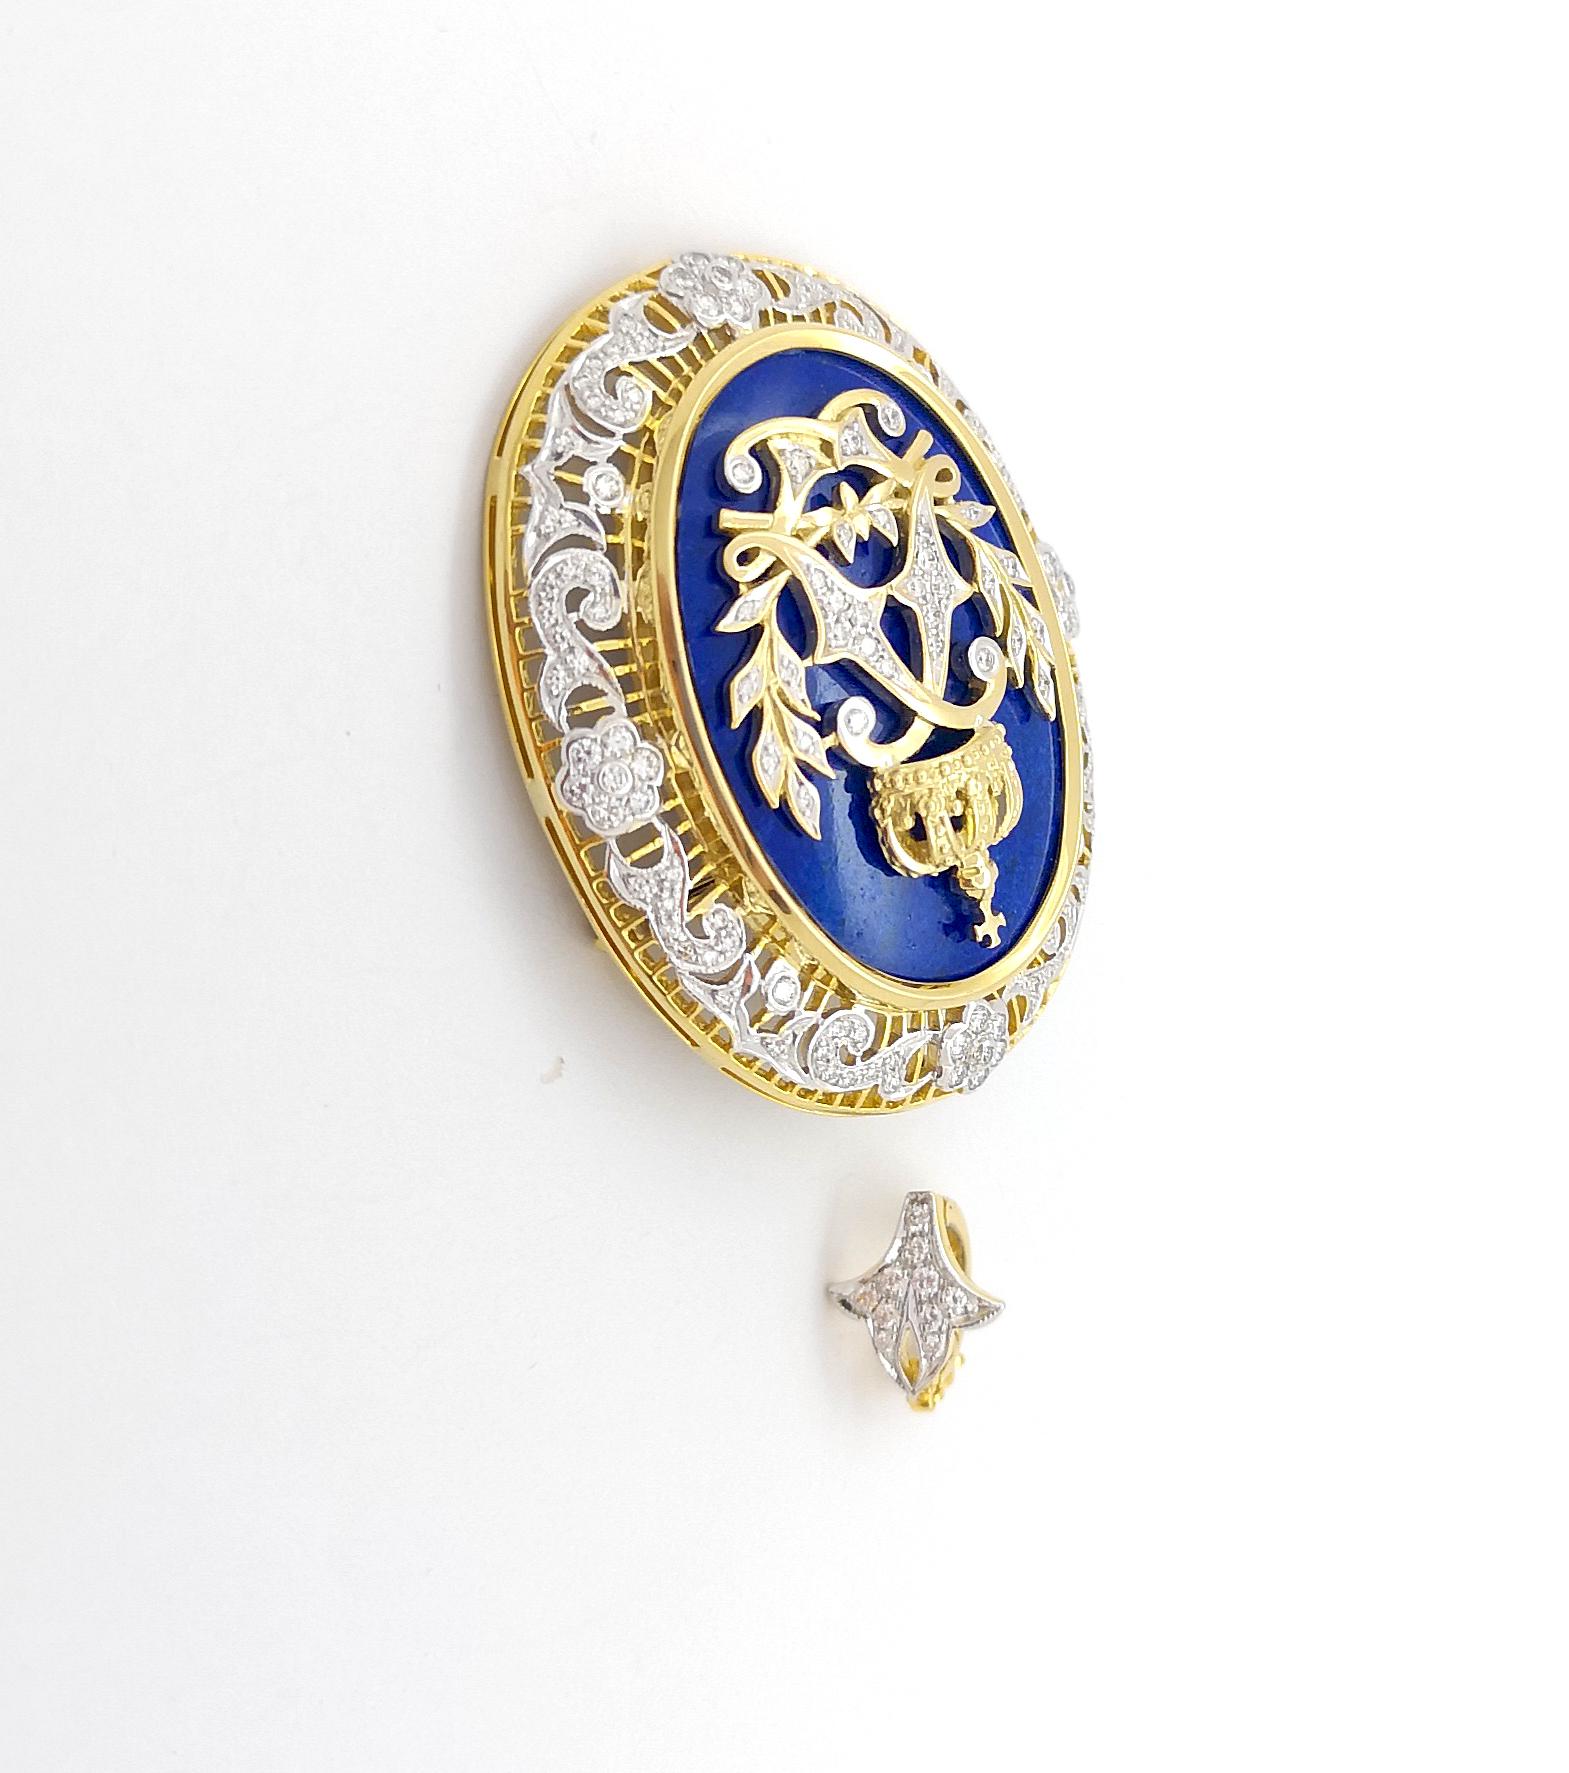 Lapiz Lazuli and Diamond Brooch/Pendant set in 18K Gold Settings For Sale 5